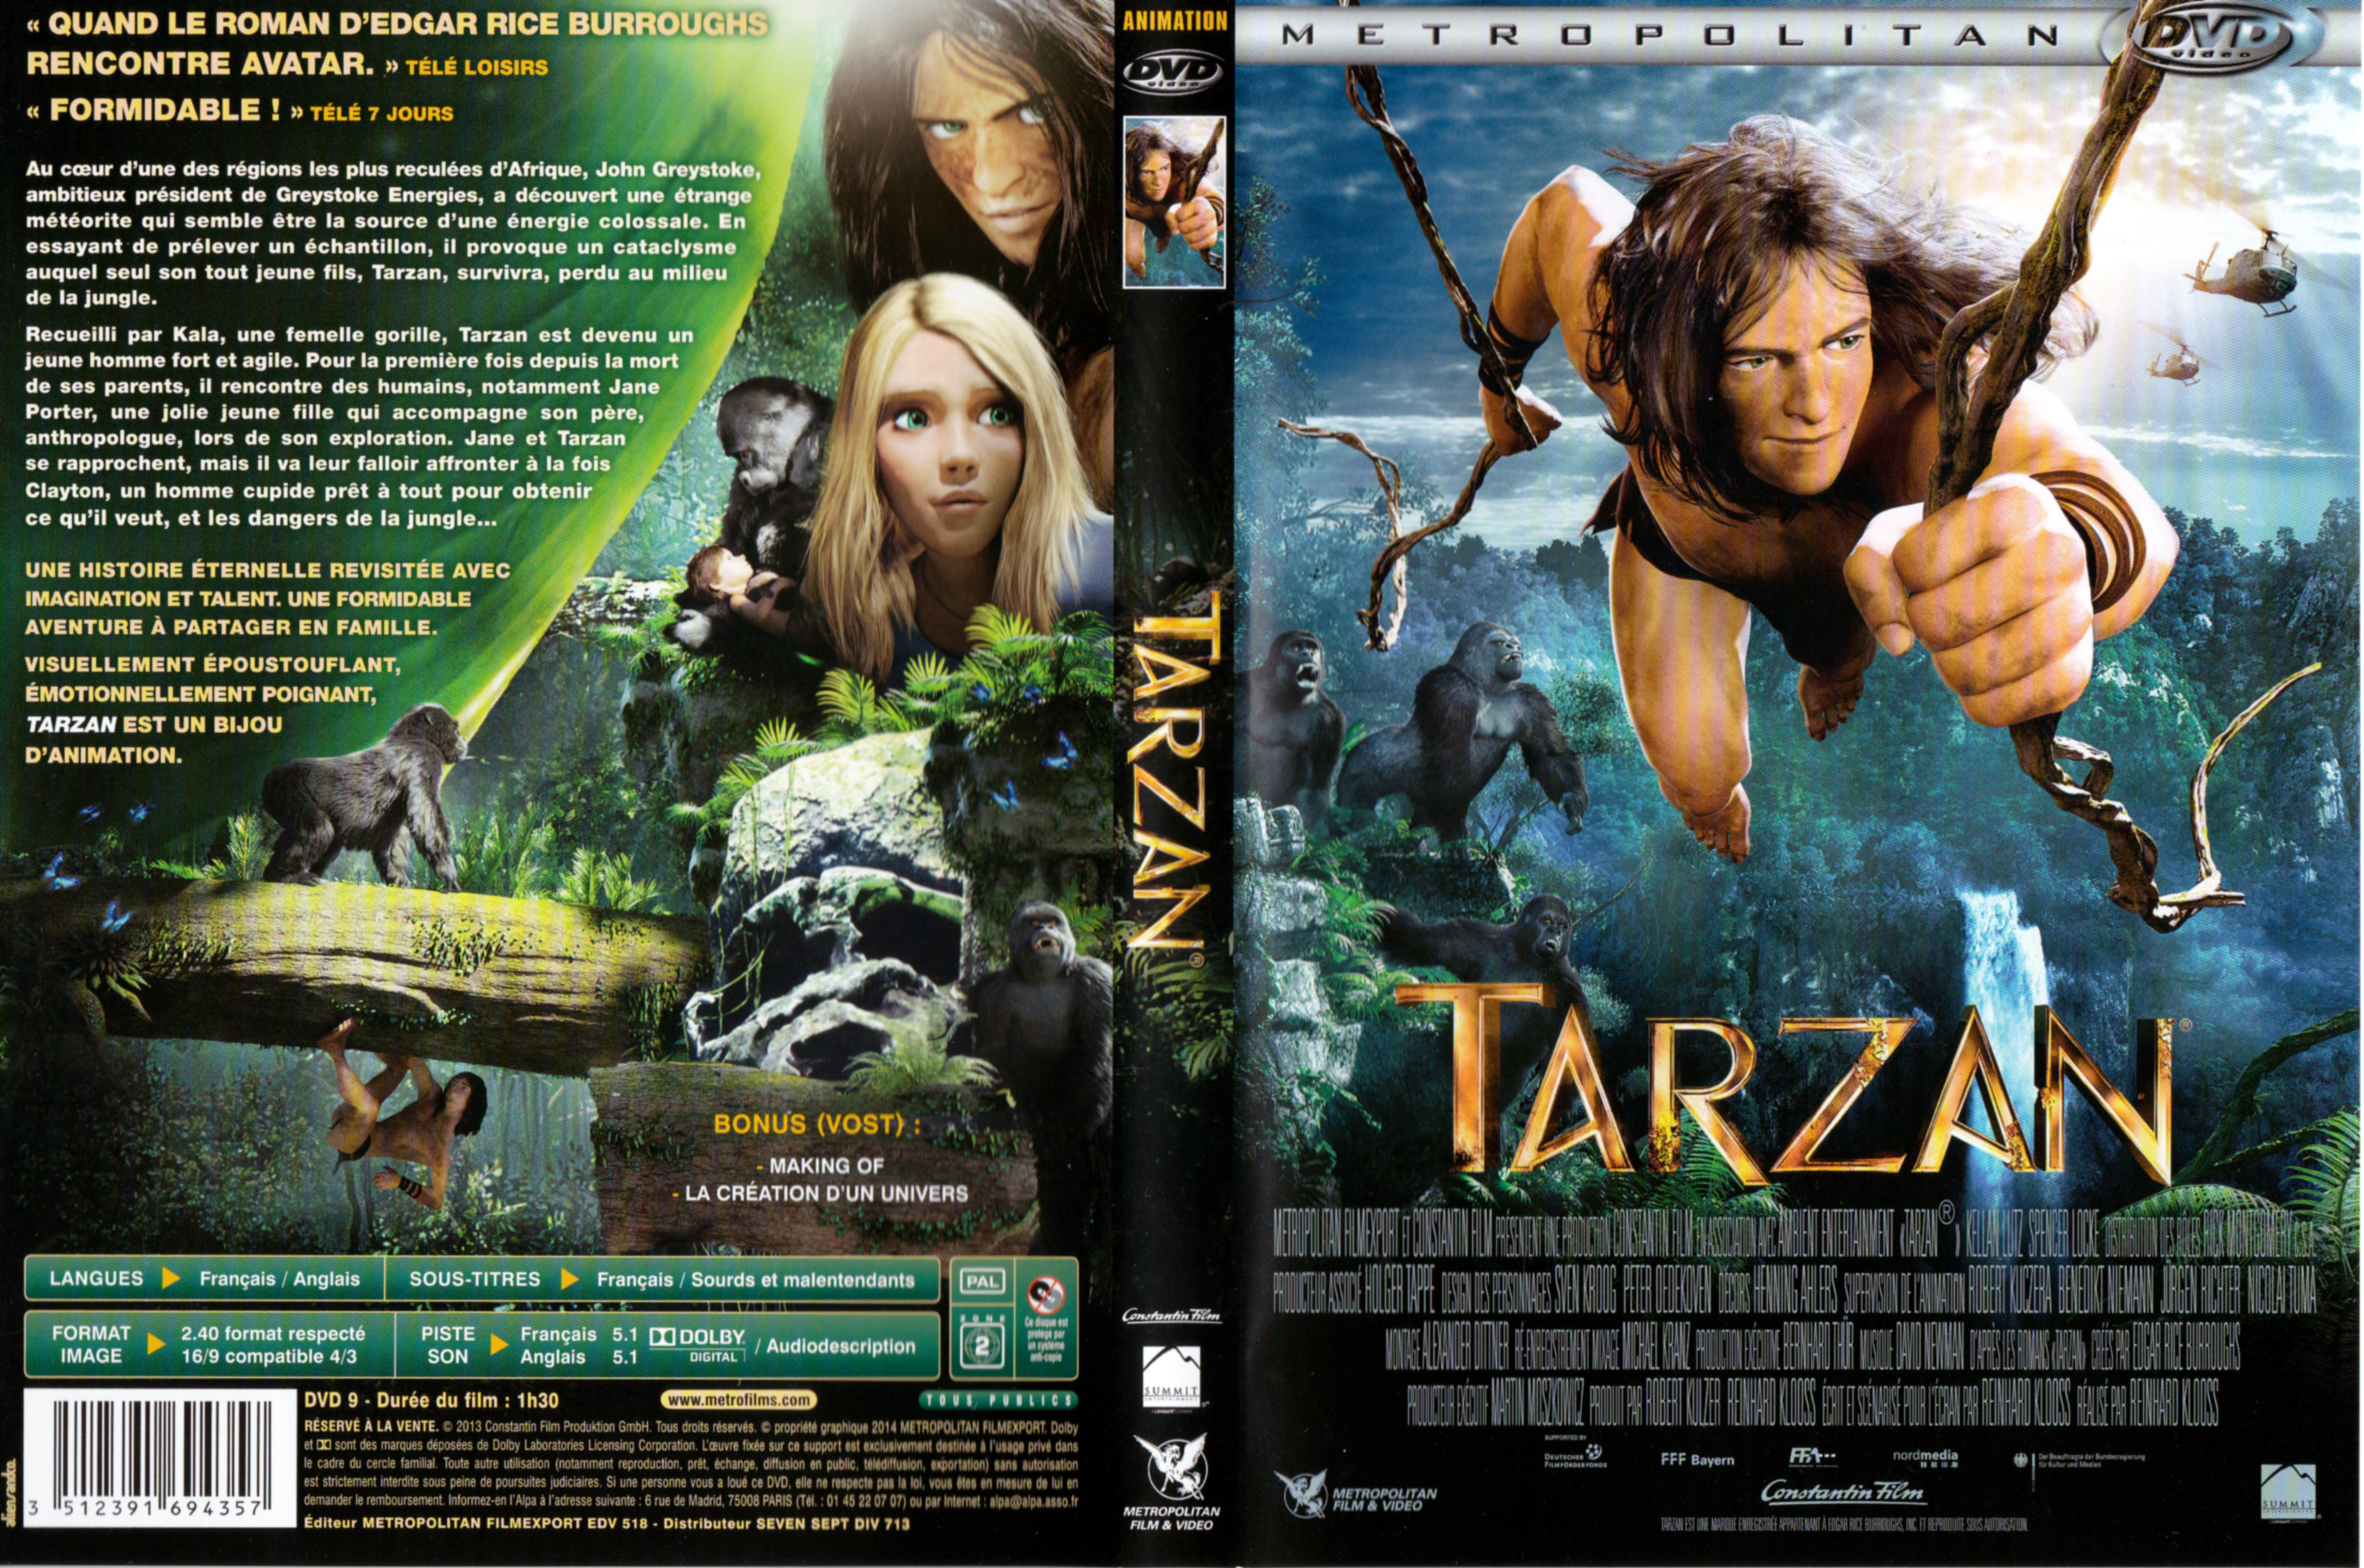 Jaquette DVD Tarzan (2014)